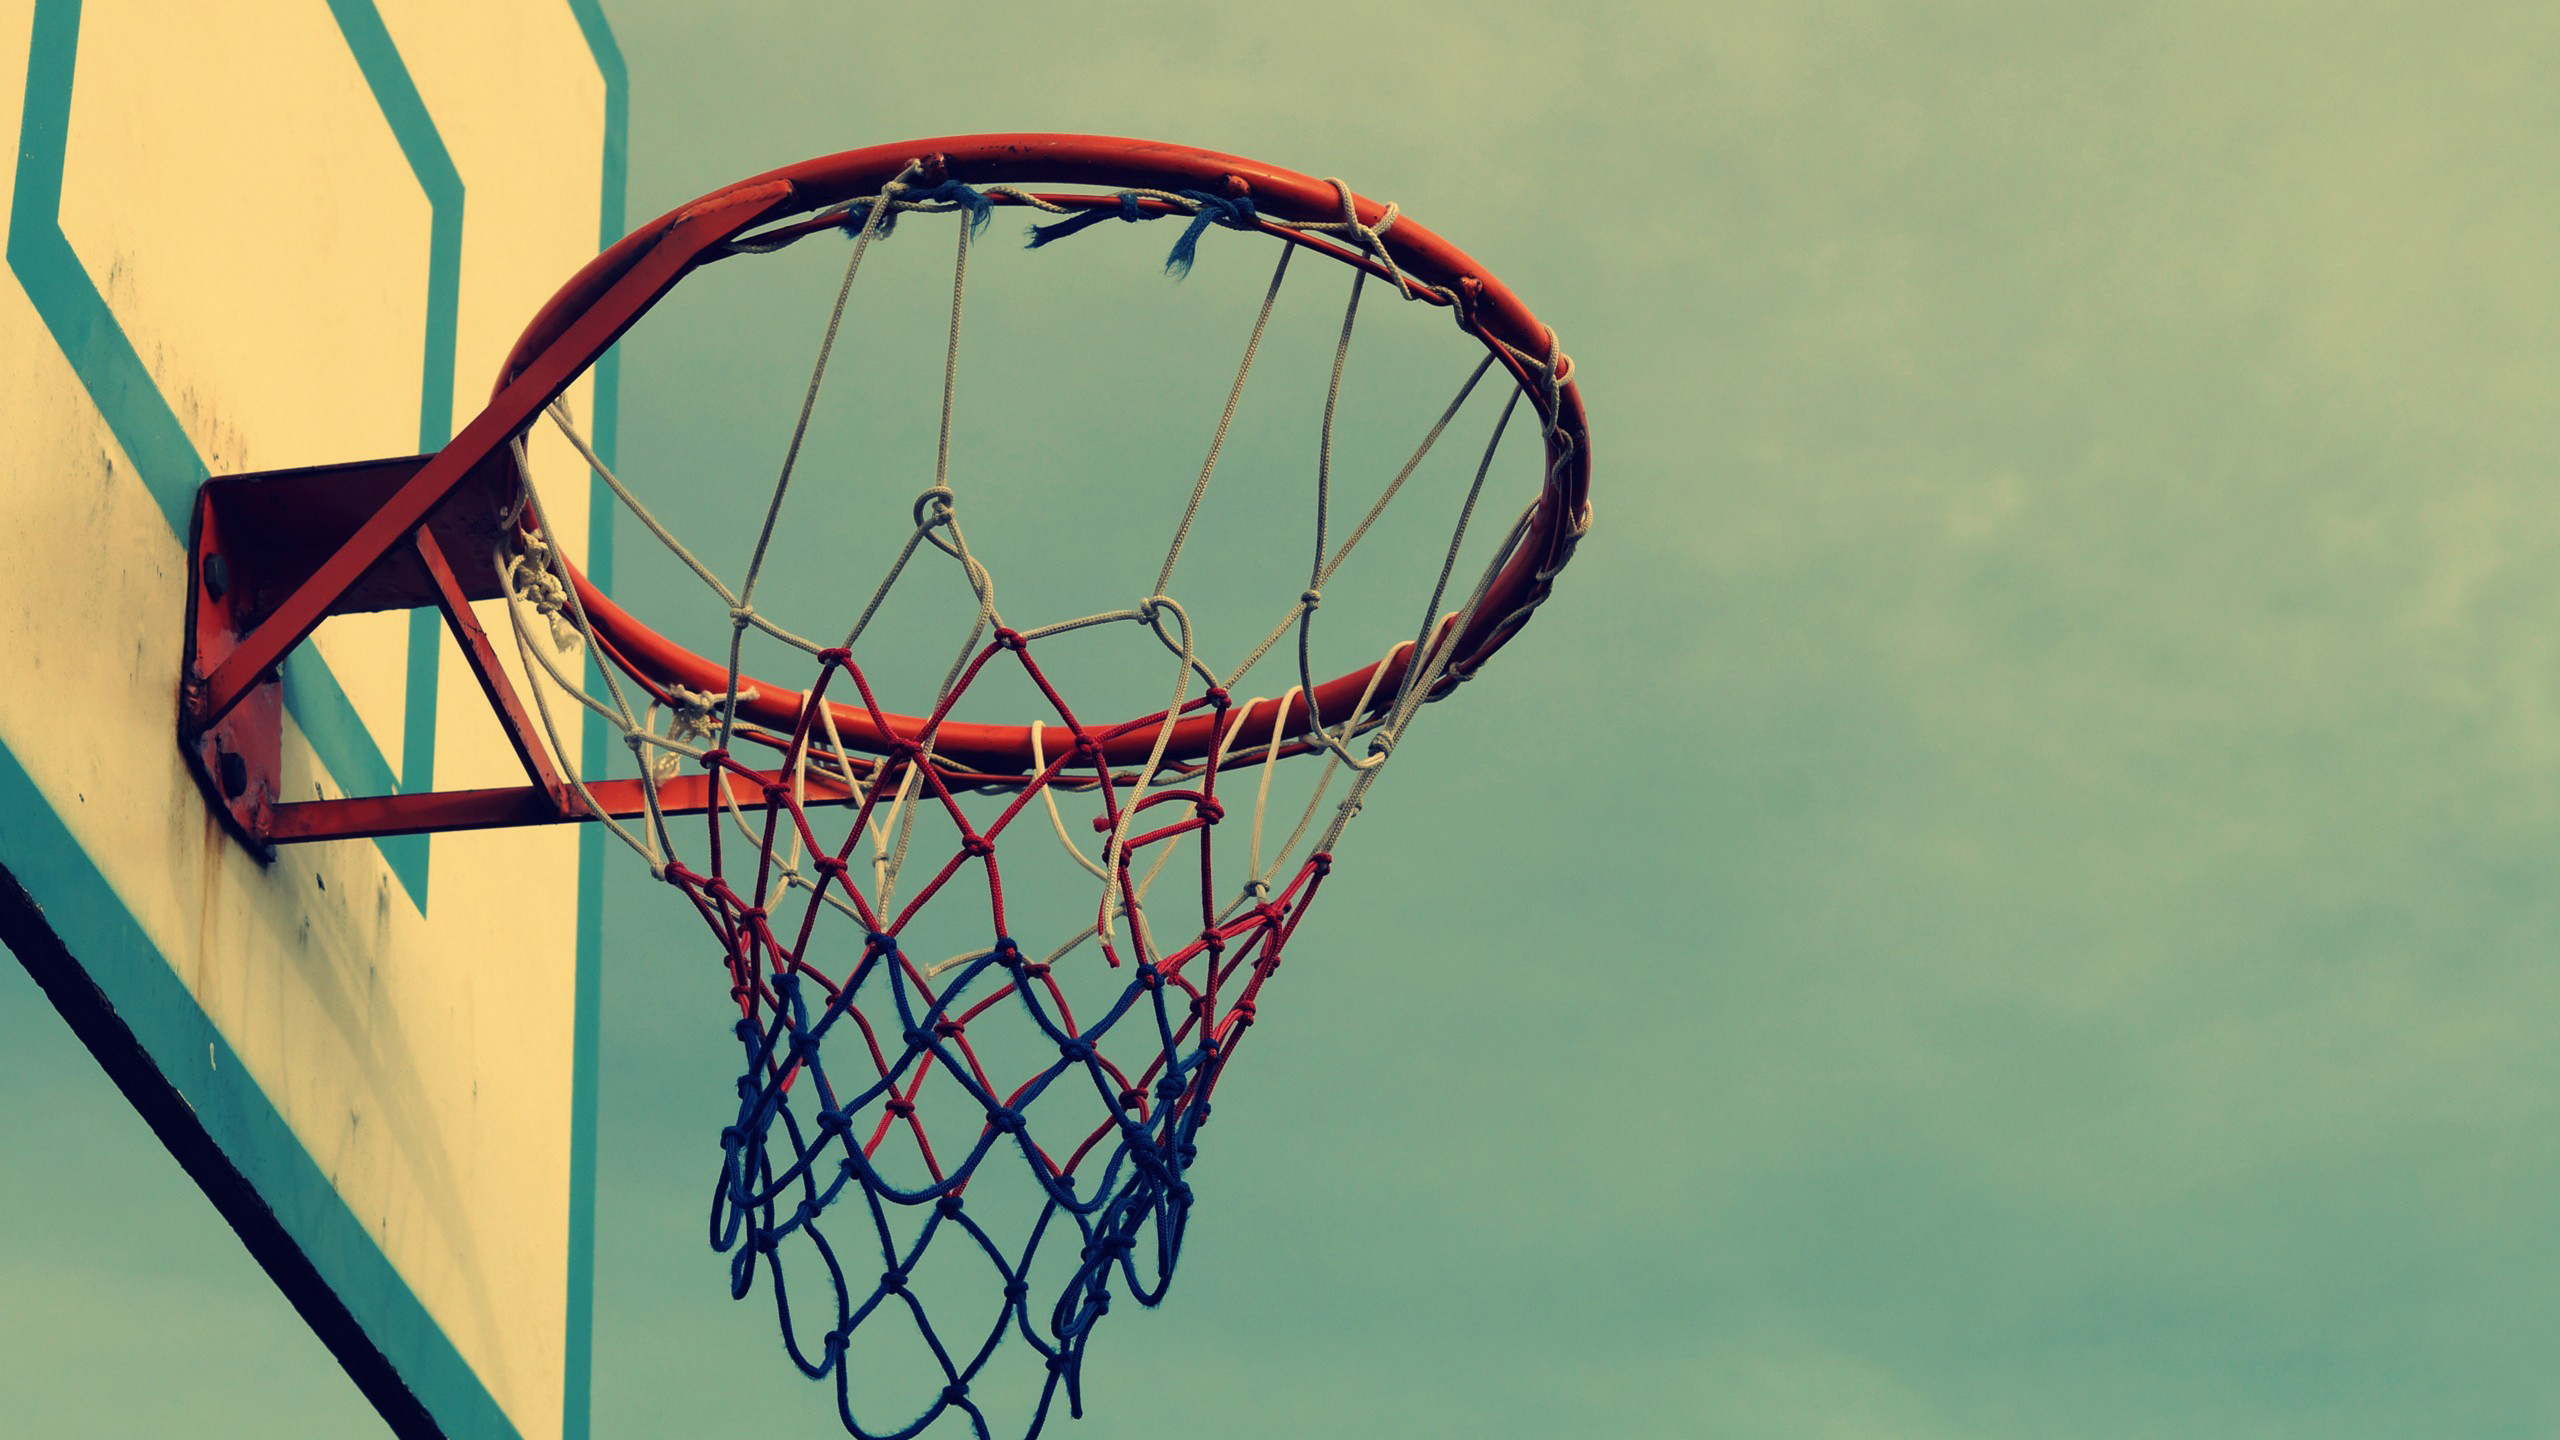 Basketball Wallpaper Photos, Download The BEST Free Basketball Wallpaper  Stock Photos & HD Images